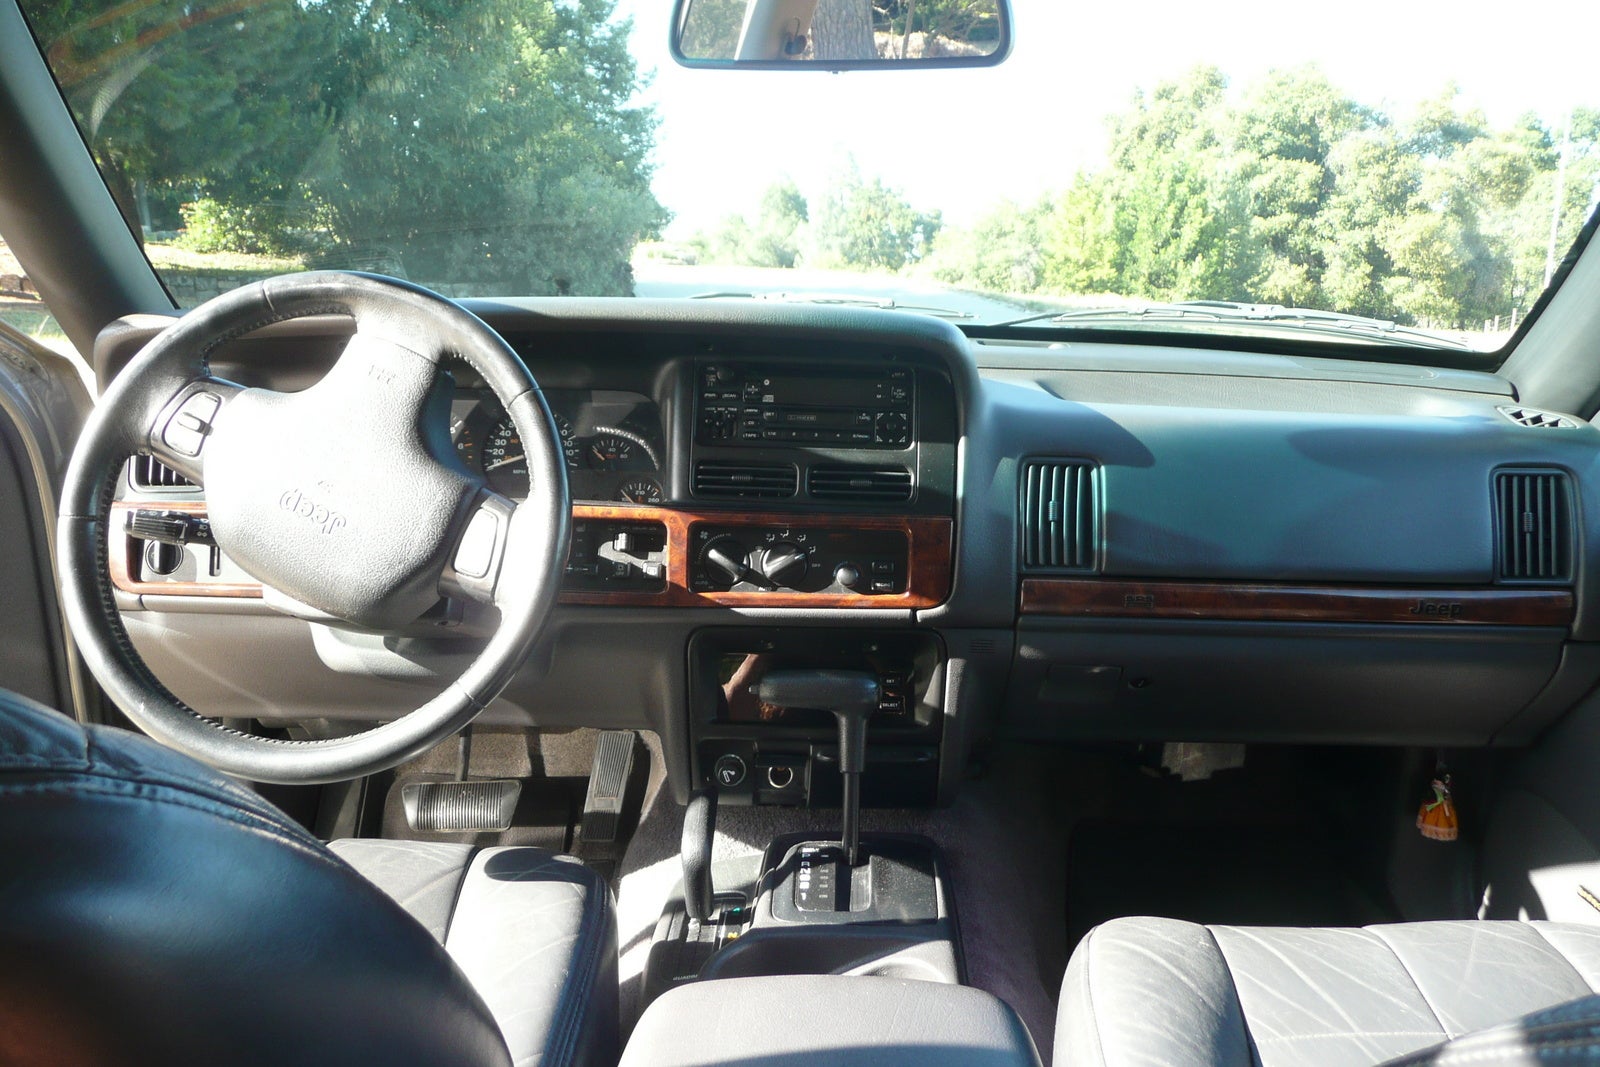 1996 Jeep wrangler interior #4